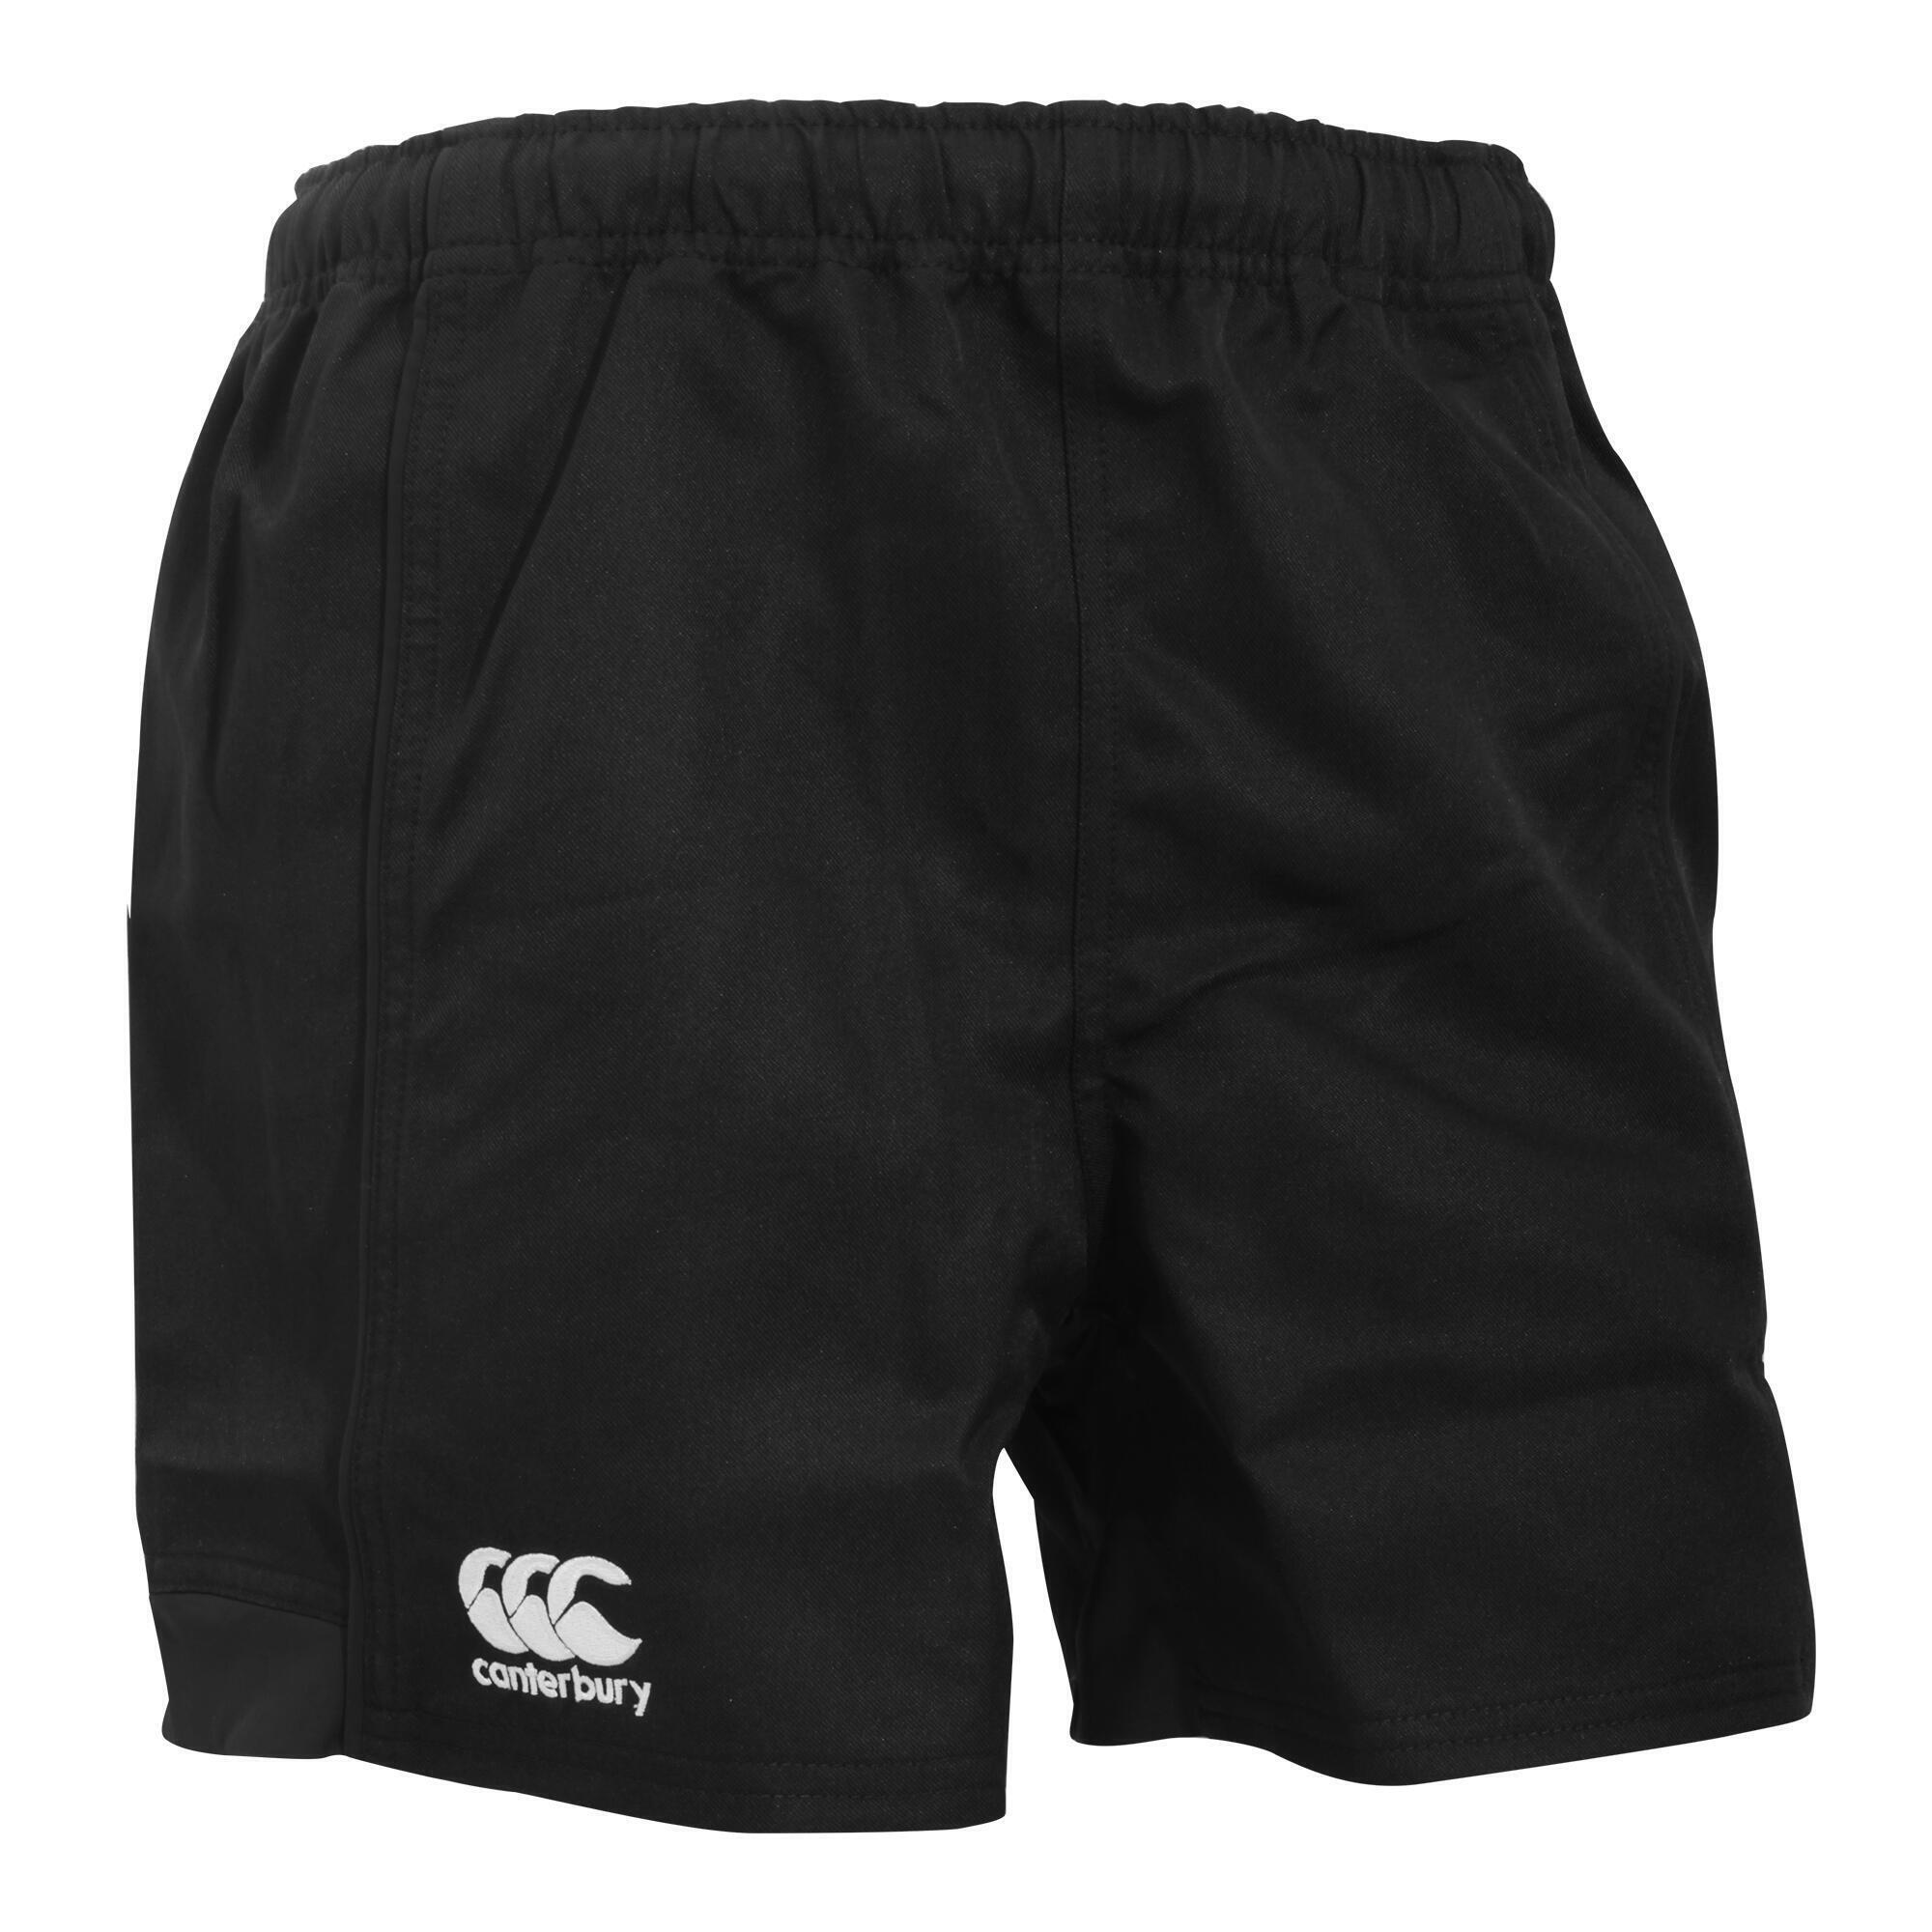 Advantage Rugby Shorts Black 